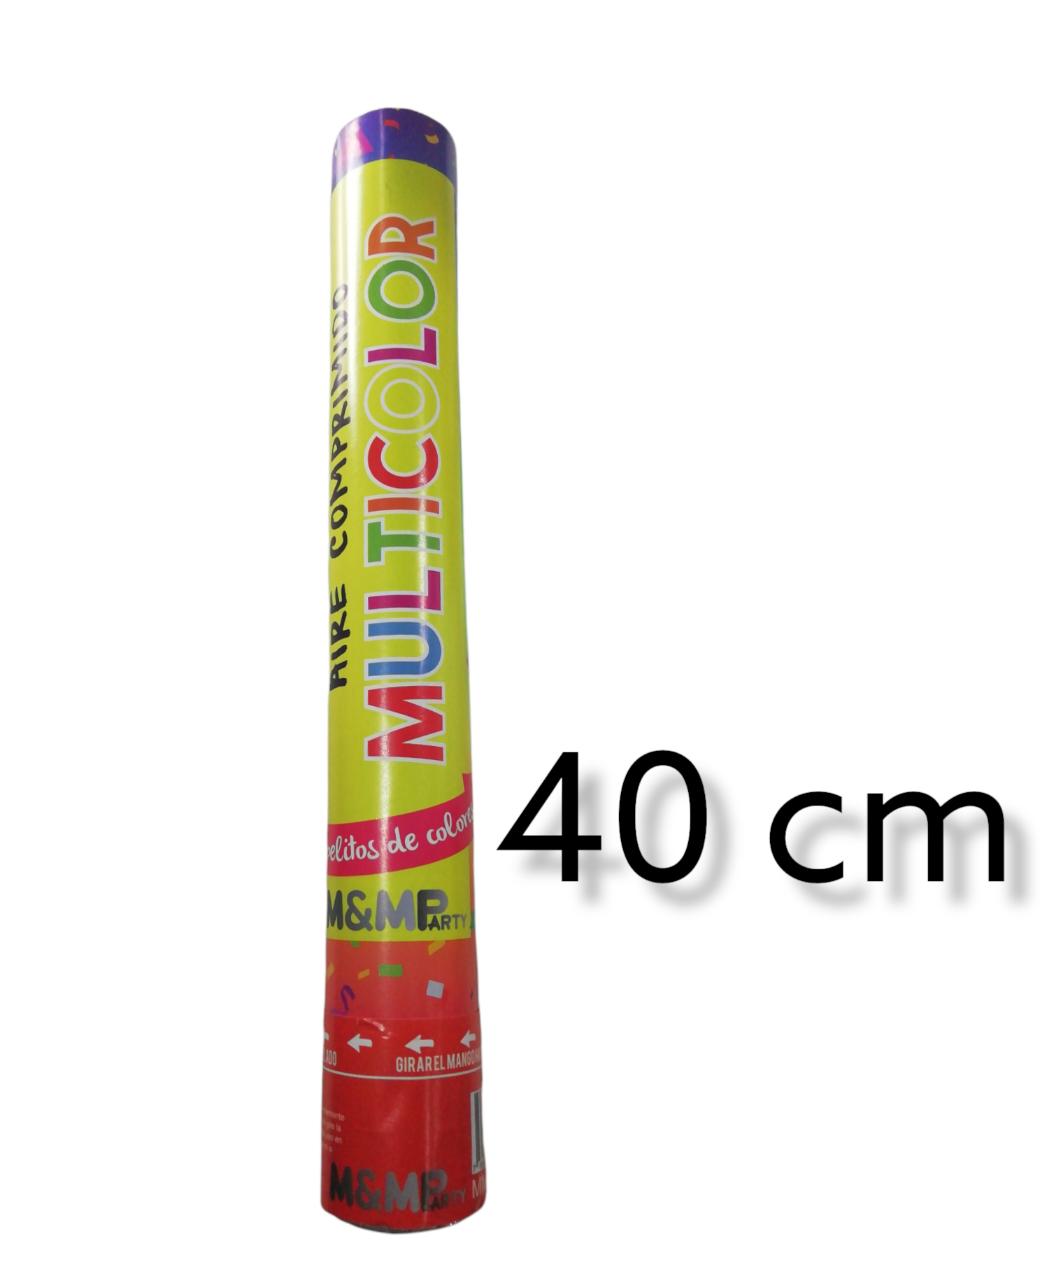 CaÑon multicolor 40cm 